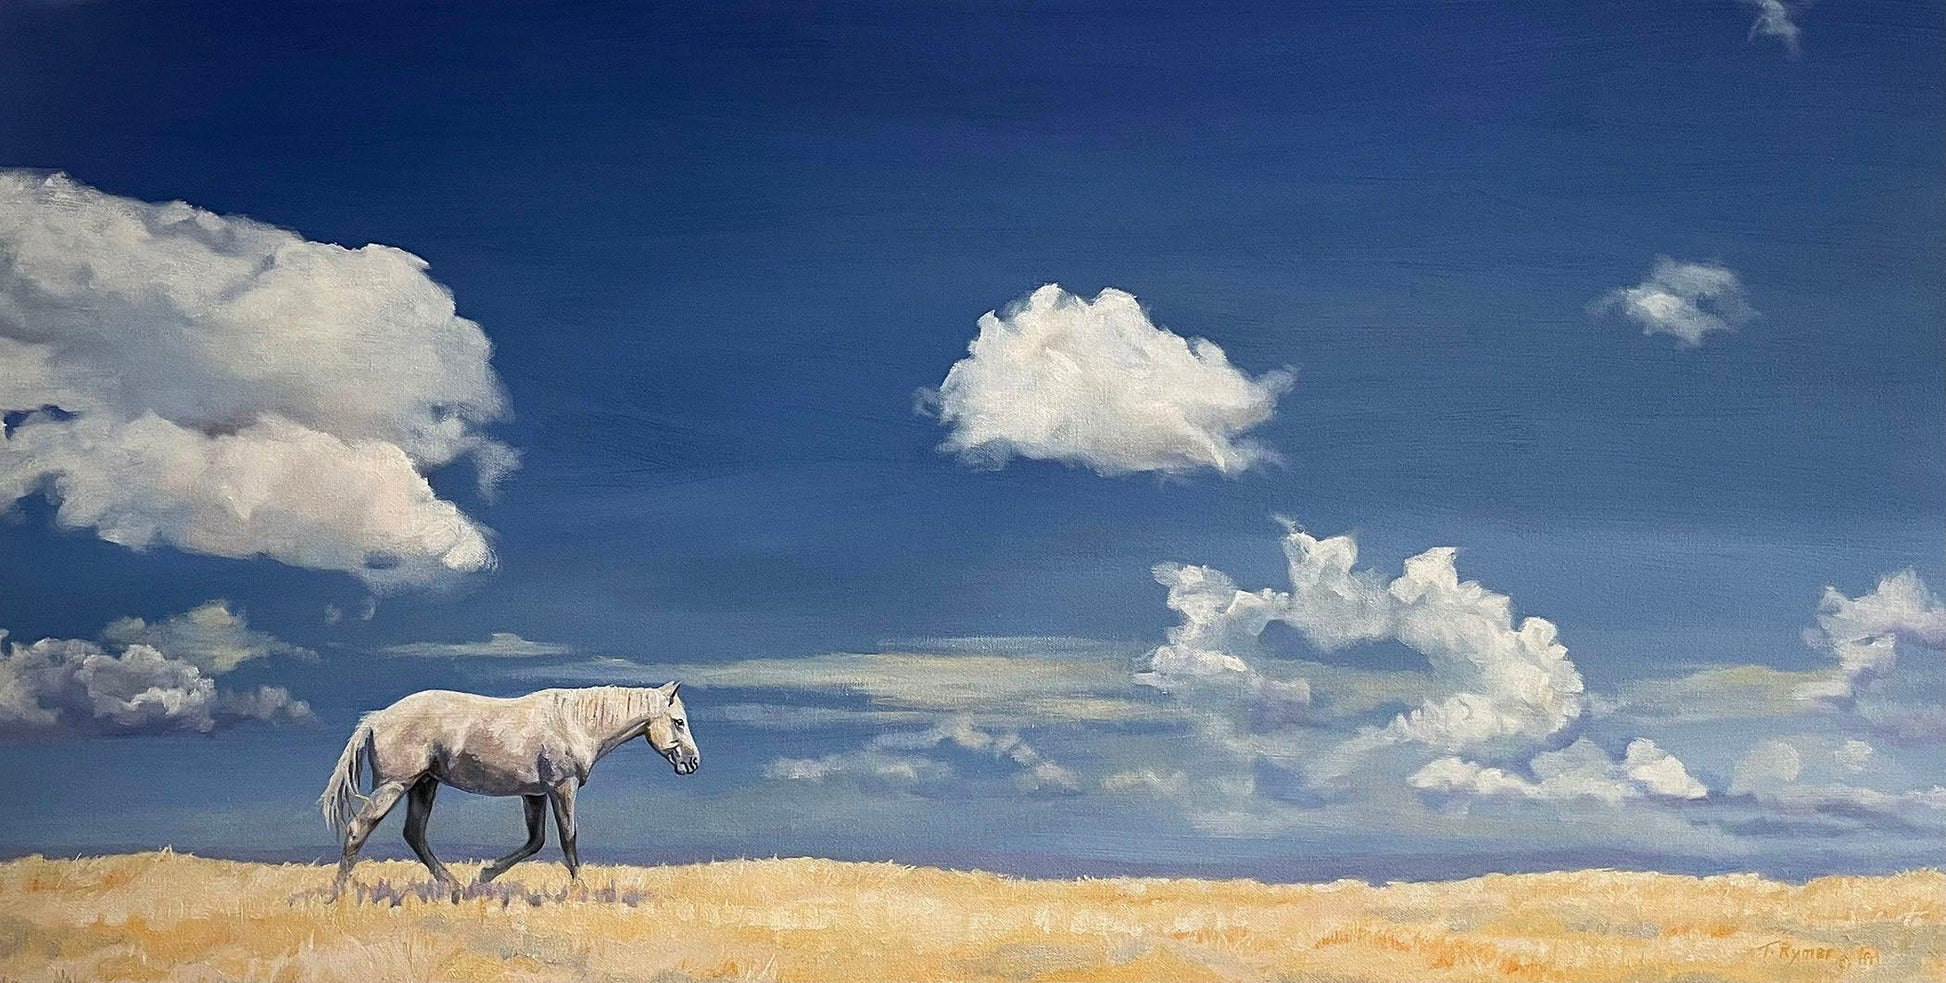 He Followed Clouds-Painting-Tamara Rymer-Sorrel Sky Gallery